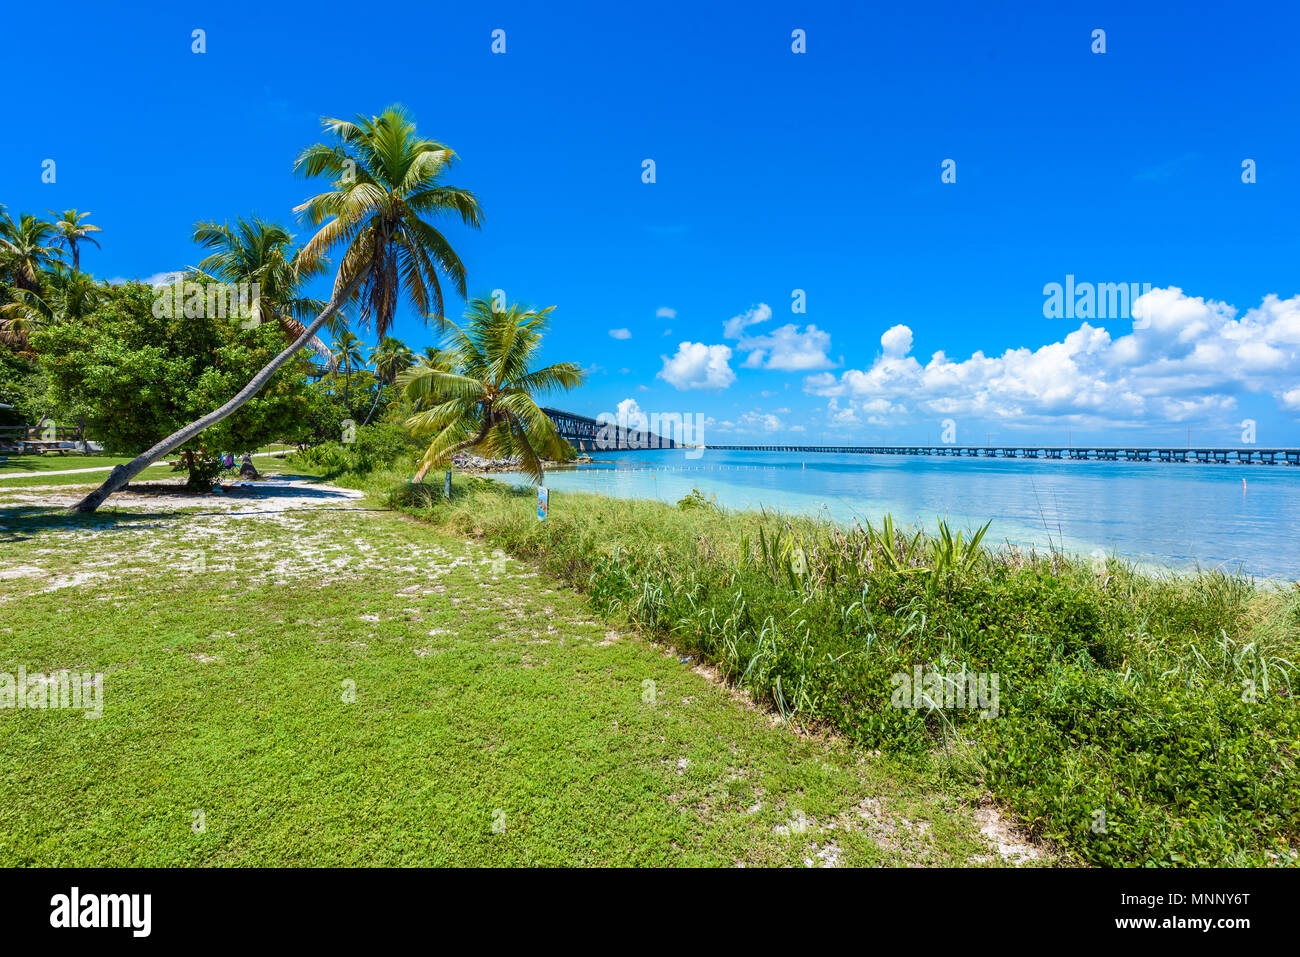 Bahia Honda State Park - Calusa Beach, Florida Keys - costa tropicale con spiagge paradisiache - USA Foto Stock